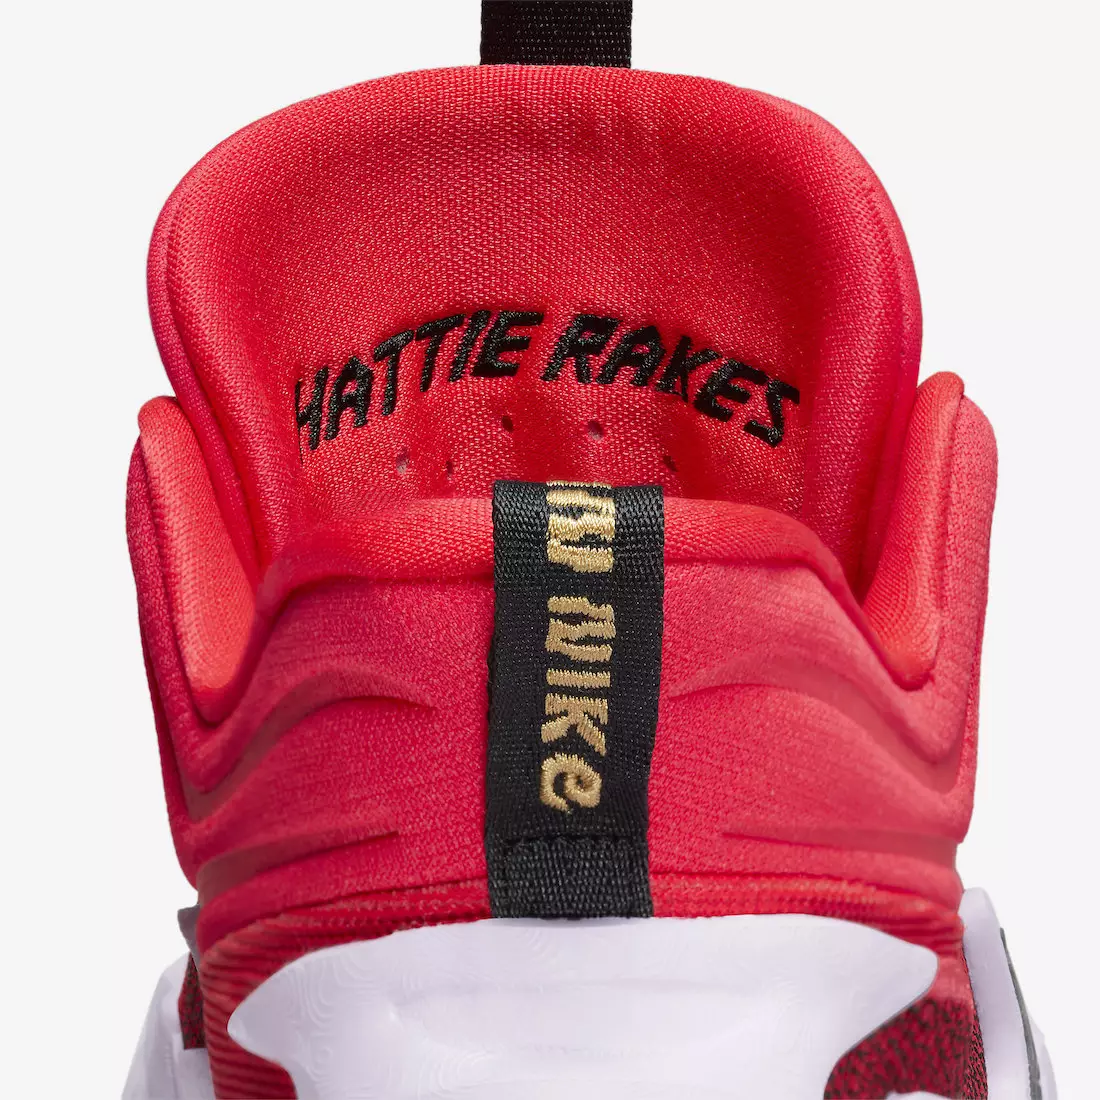 Nike Cosmic Unity 2 Hattie Rakes Siren Red DH1537-601 Datum vydání